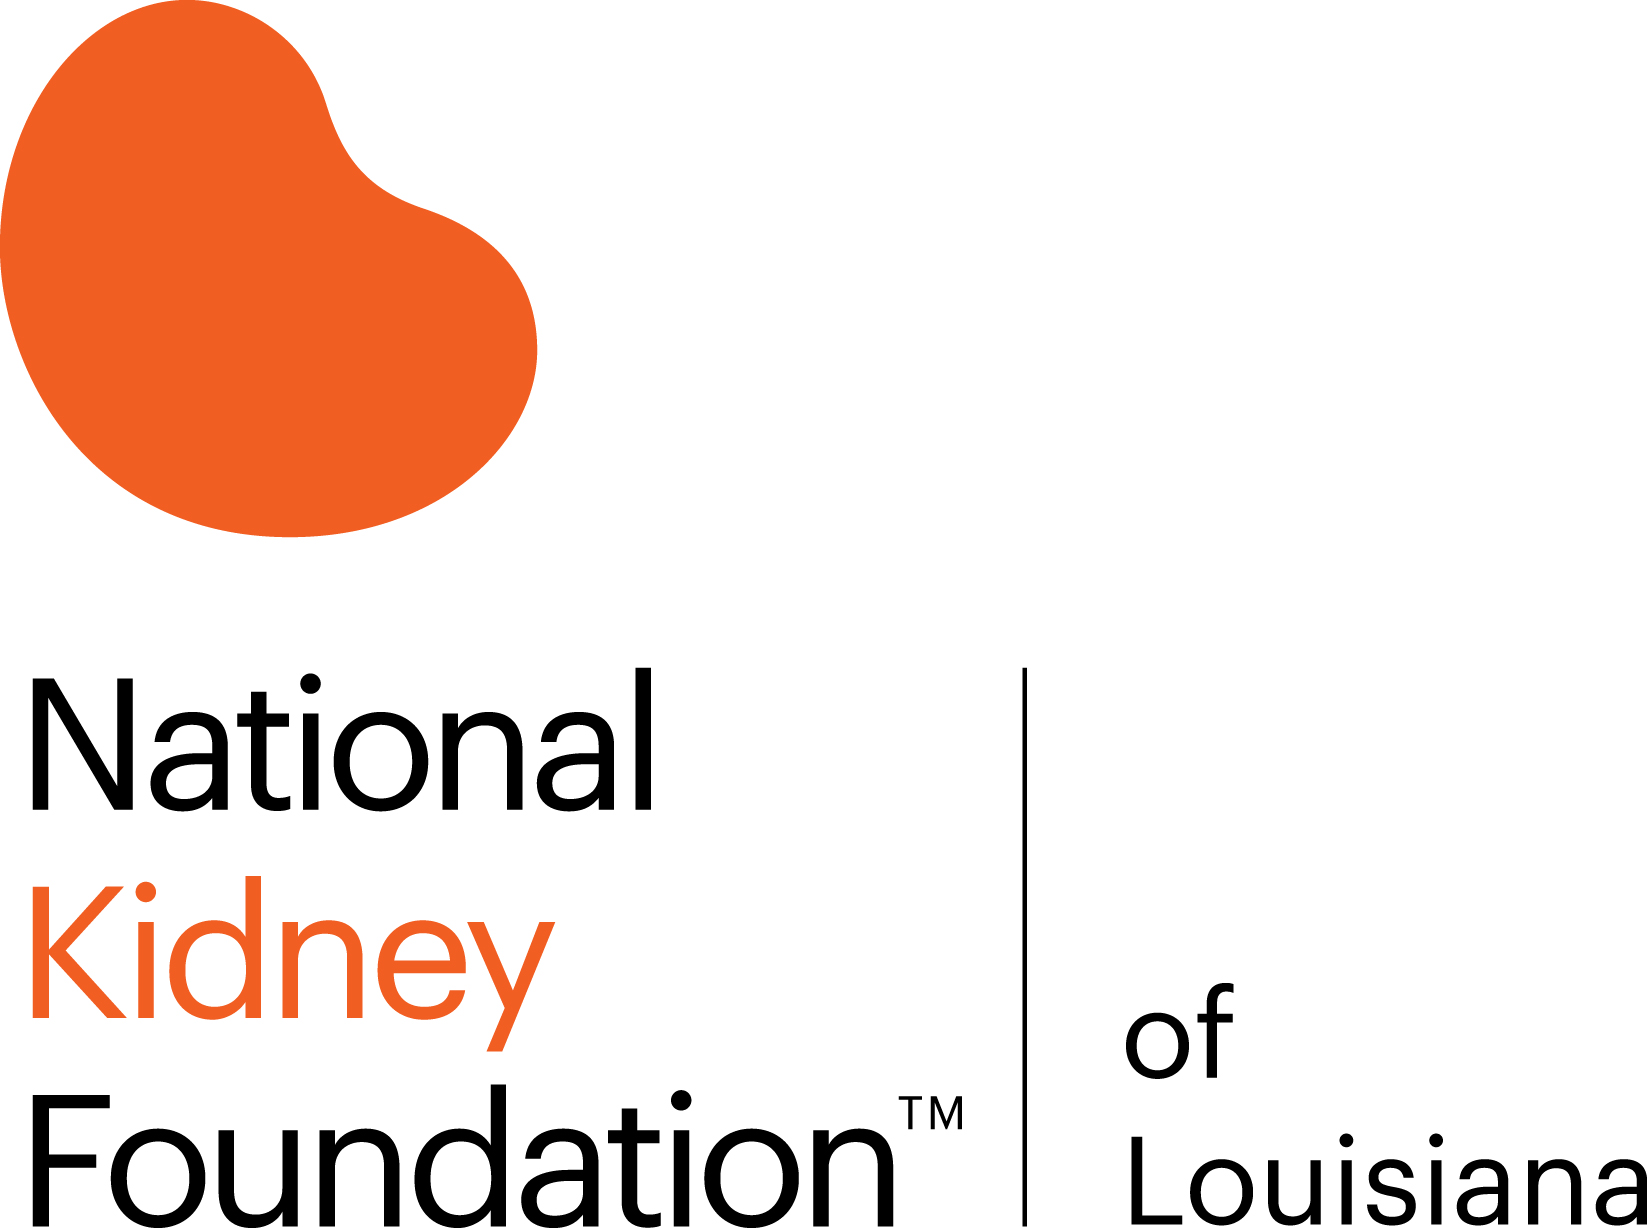 National kidney foundation of michigan jobs